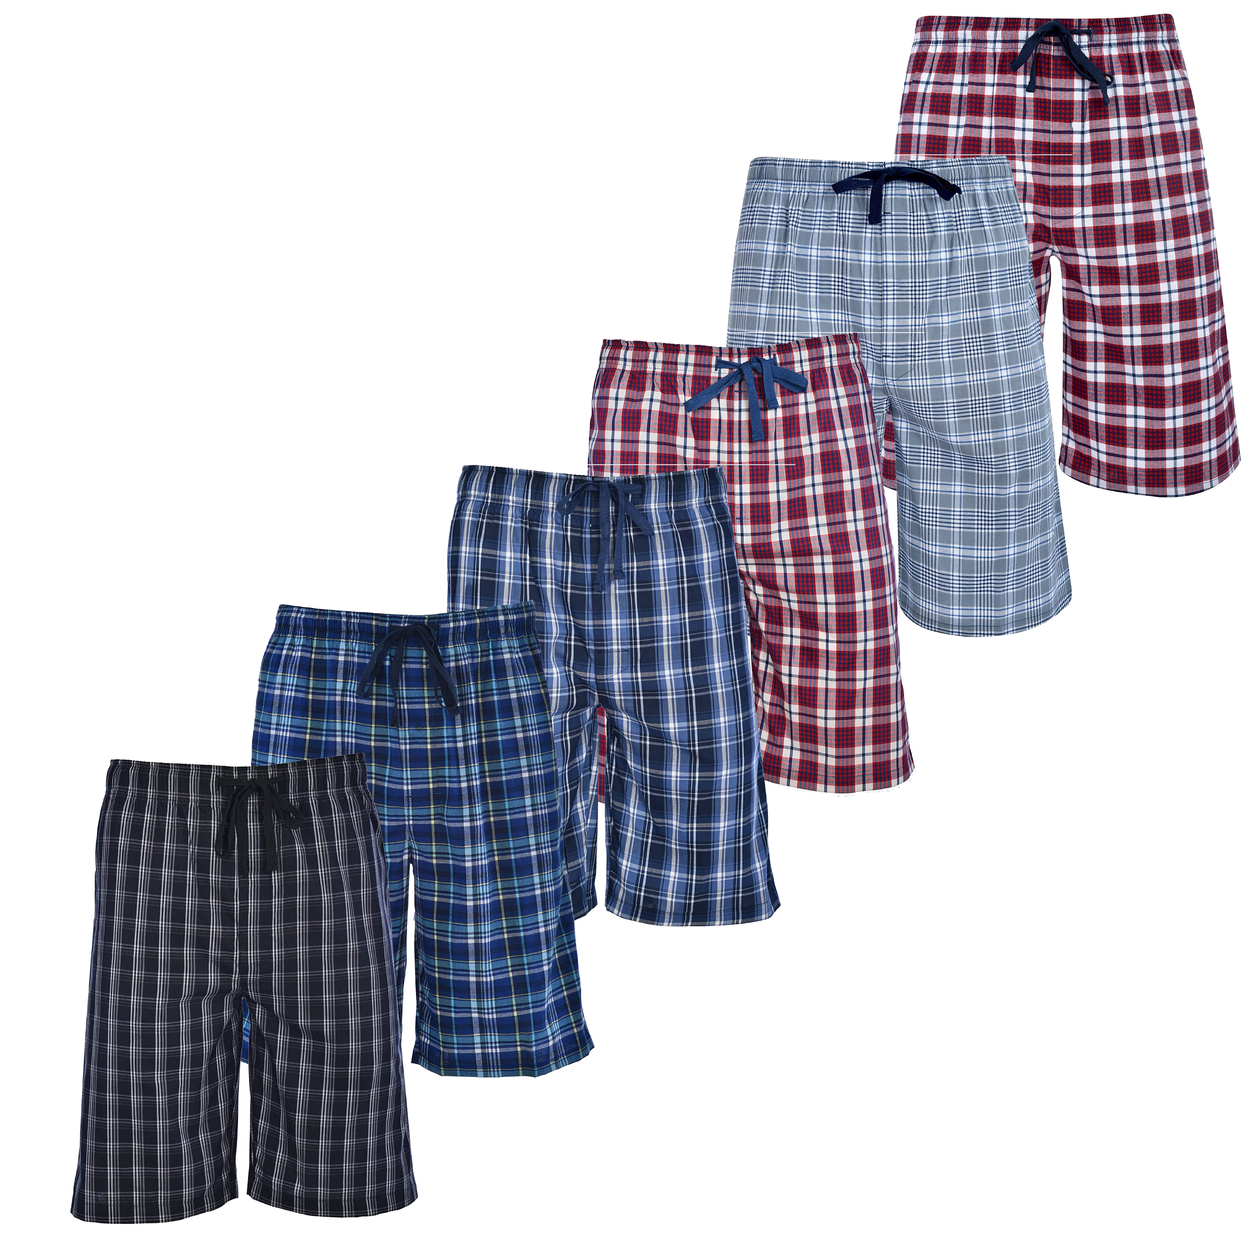 Bargain Hunters 2-Pack: Mens Ultra Soft Plaid Lounge Pajama Sleep Wear Shorts